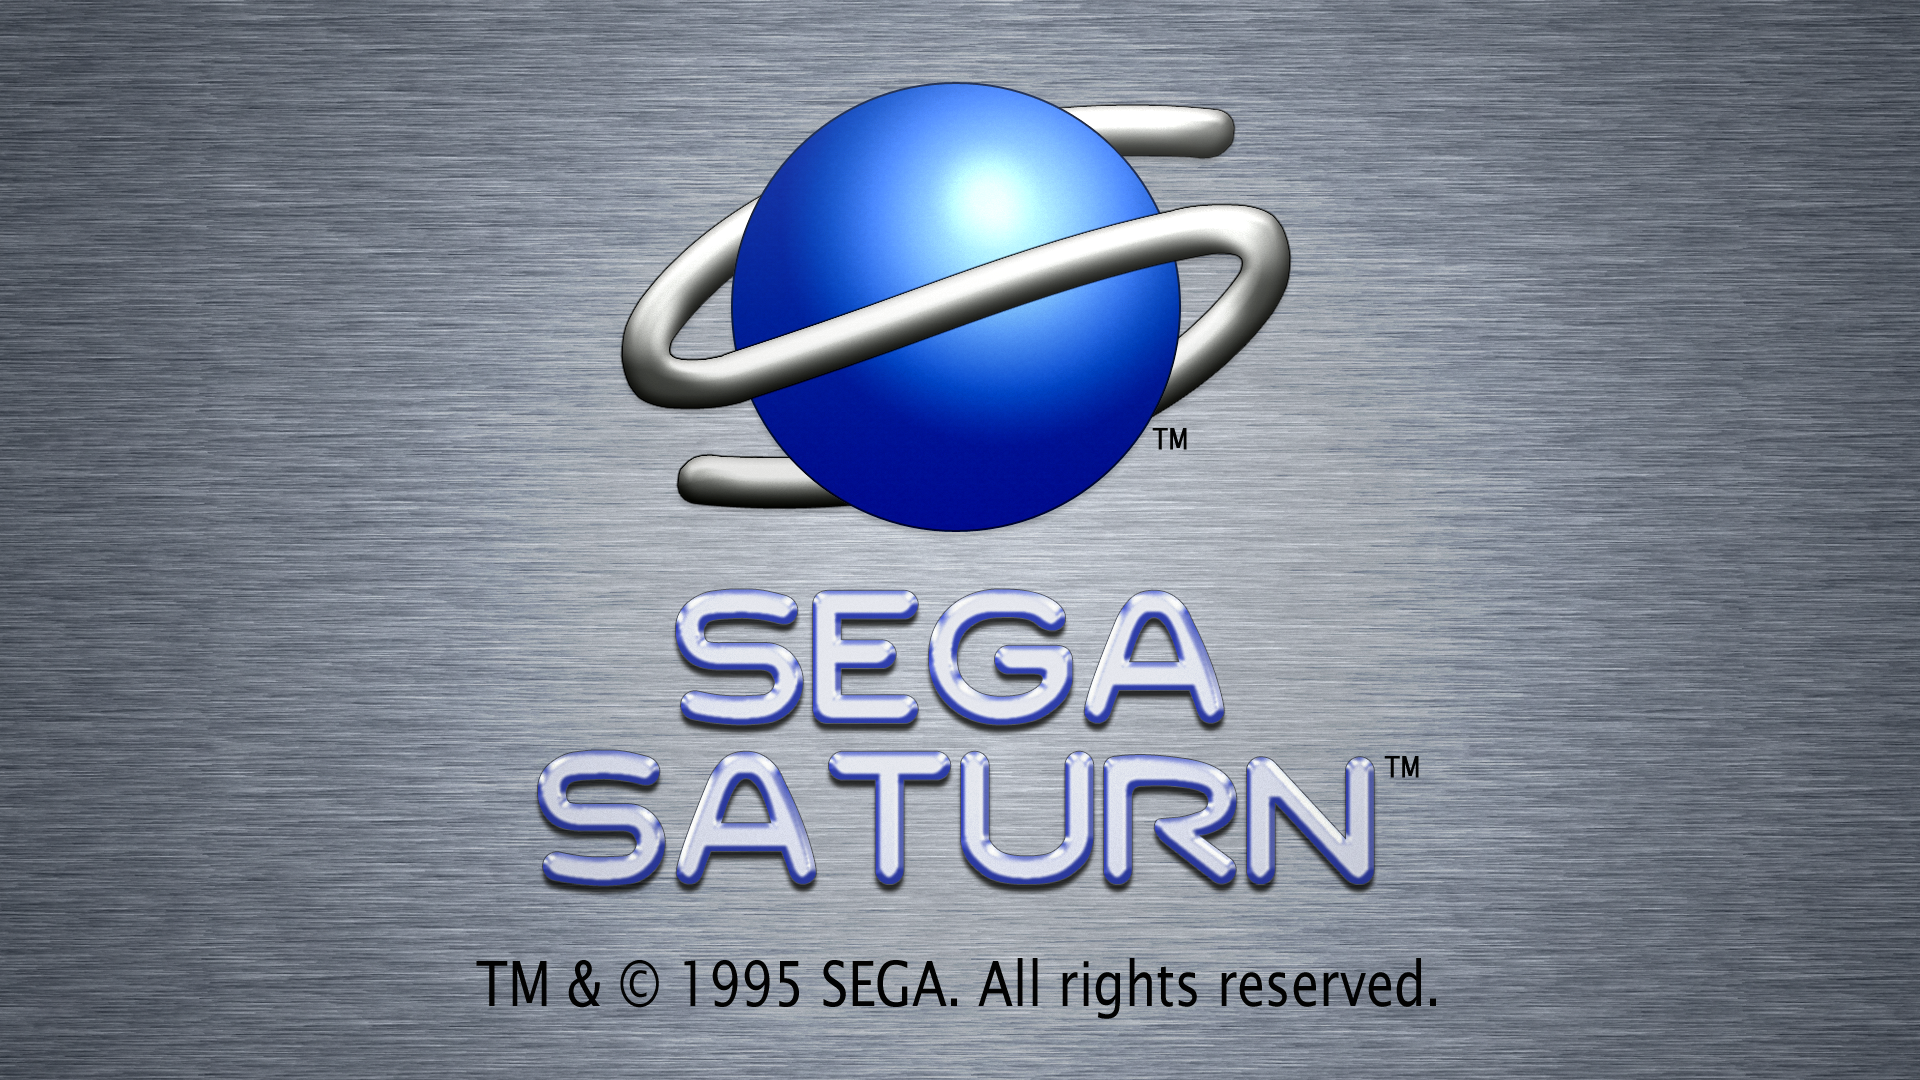 Sega Saturn Background. Saturn